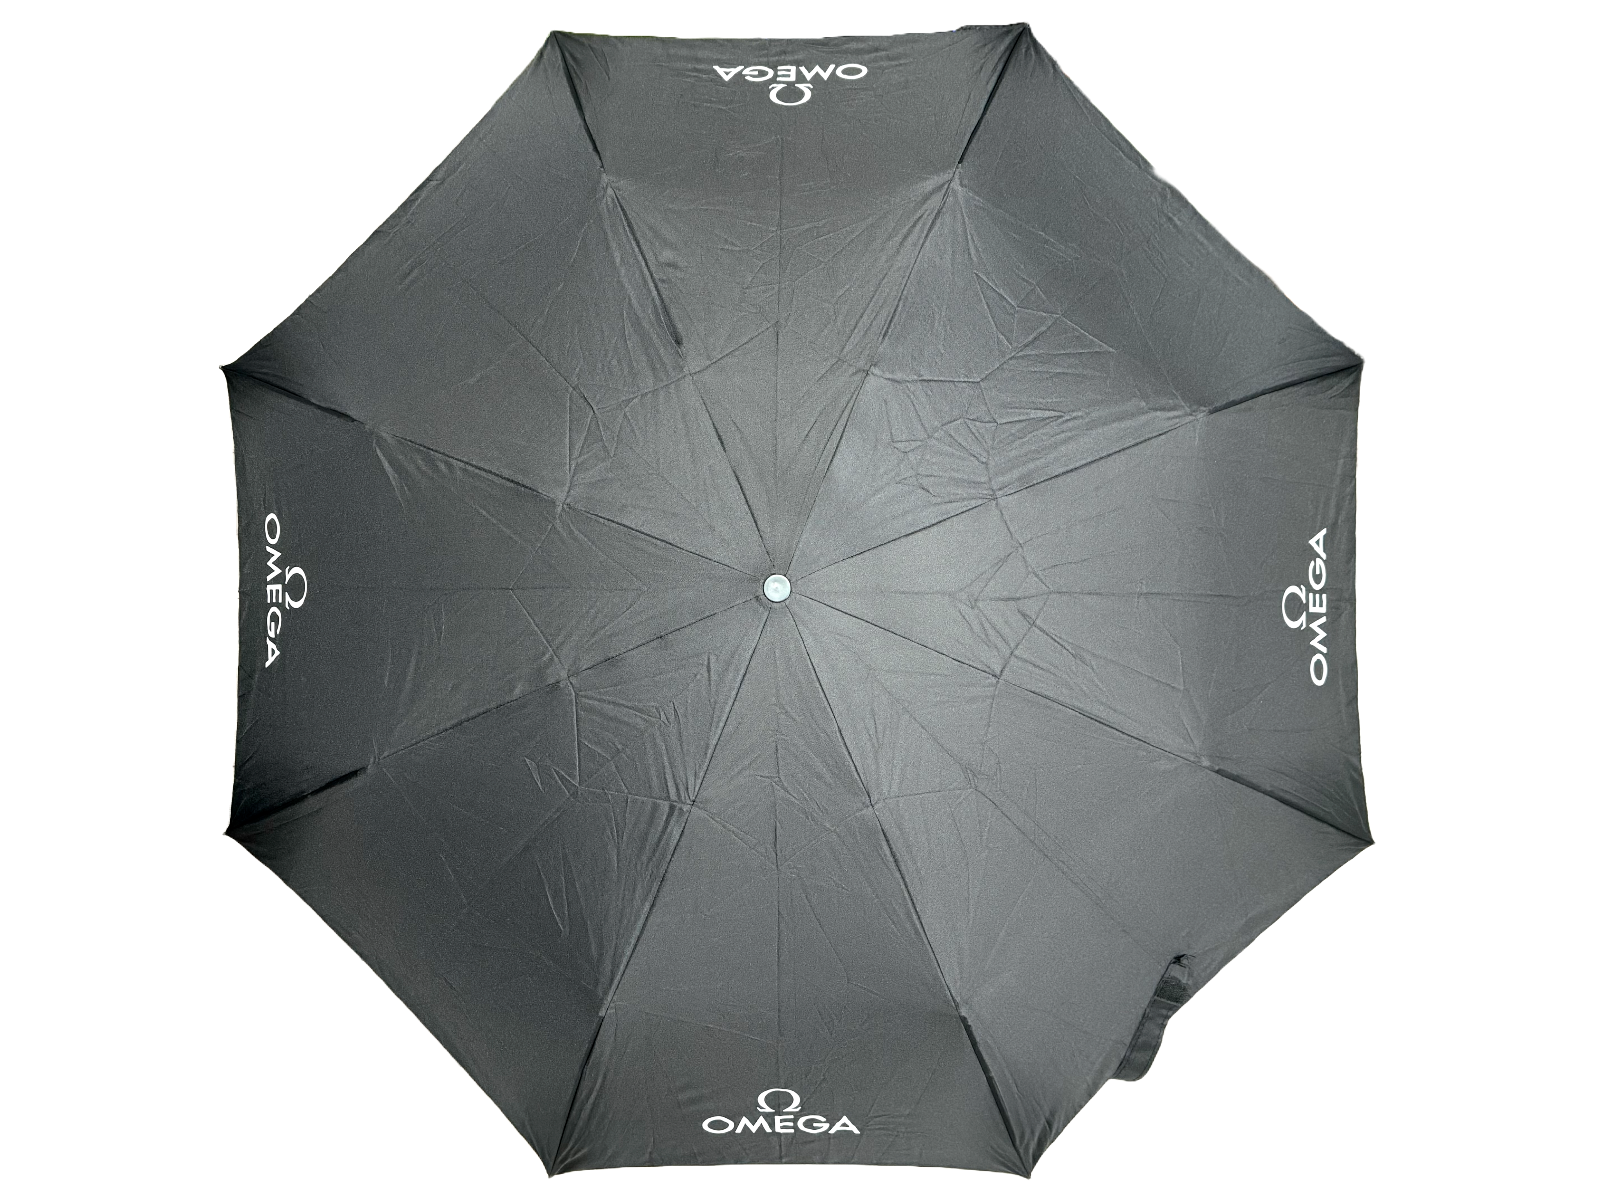 Omega Regenschirm Polyester Schwarz